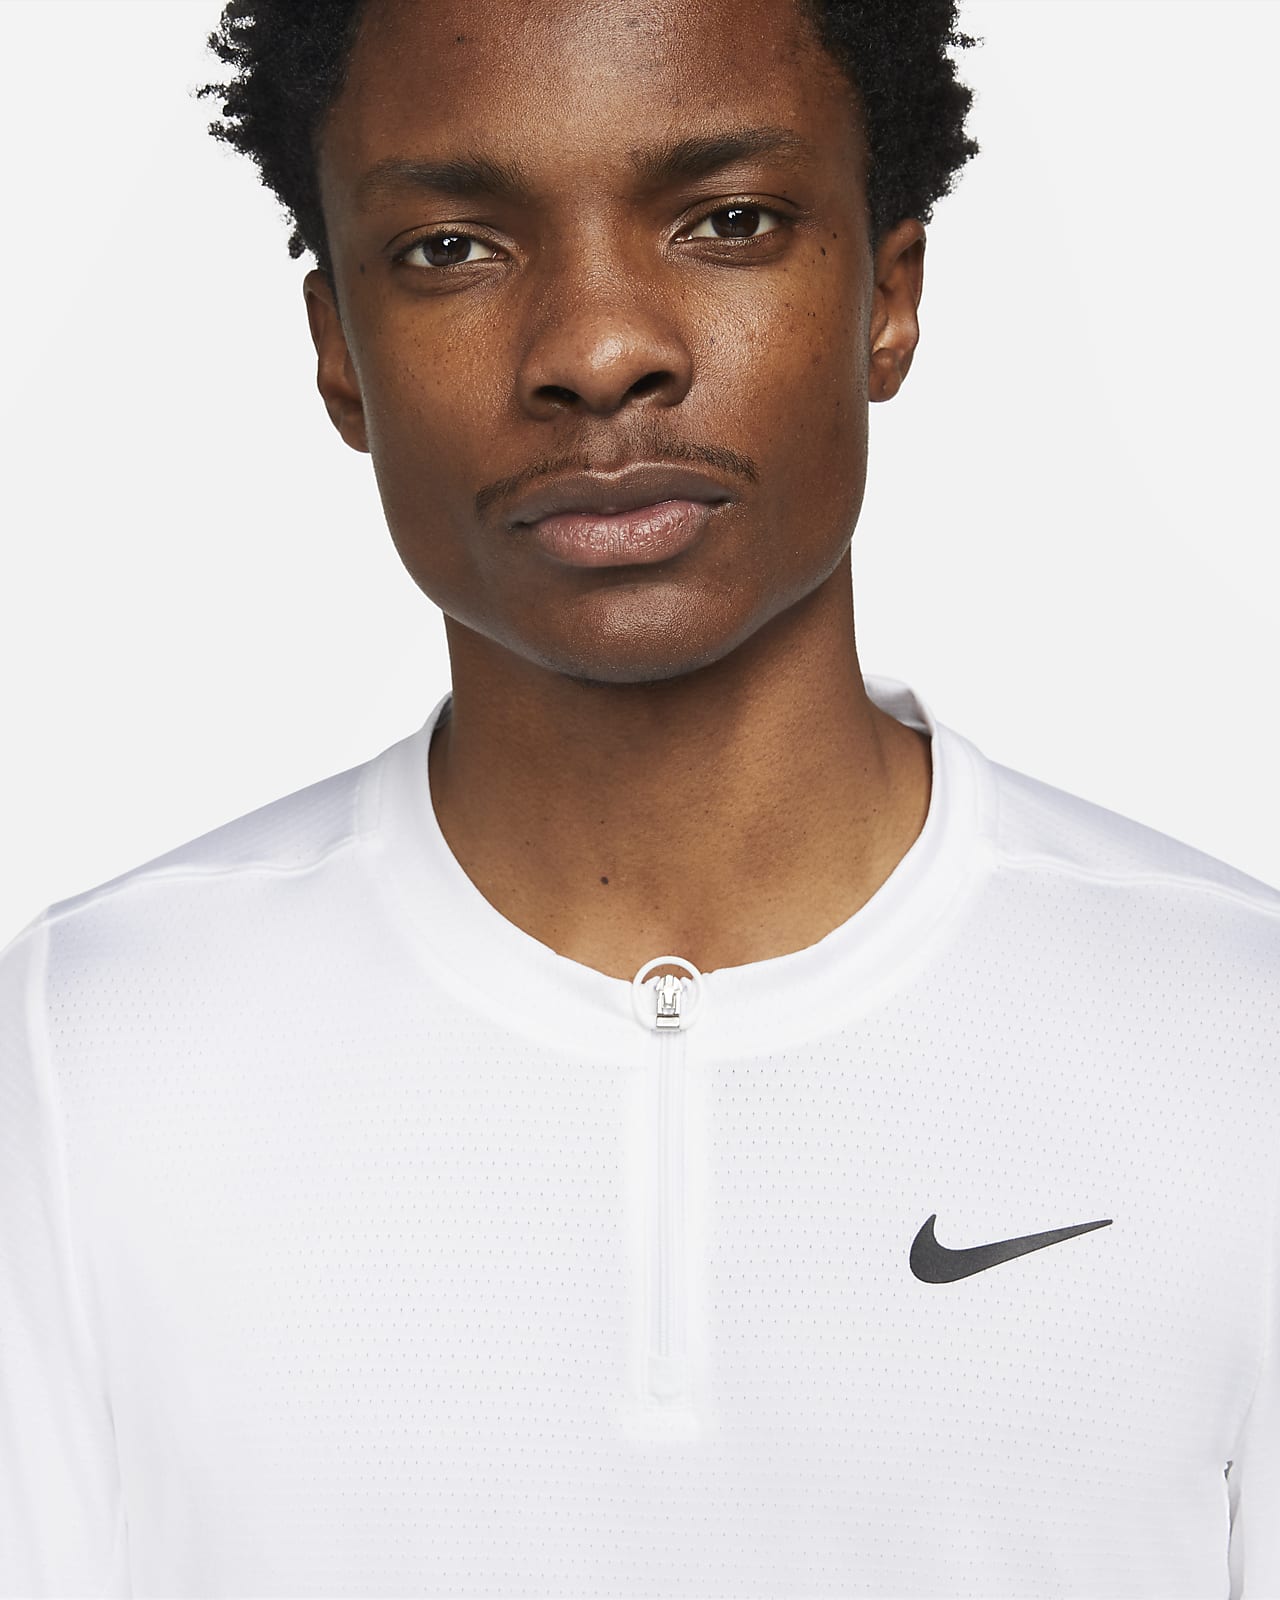 NikeCourt Dri-FIT Advantage Men's Half-Zip Tennis Top. Nike CZ